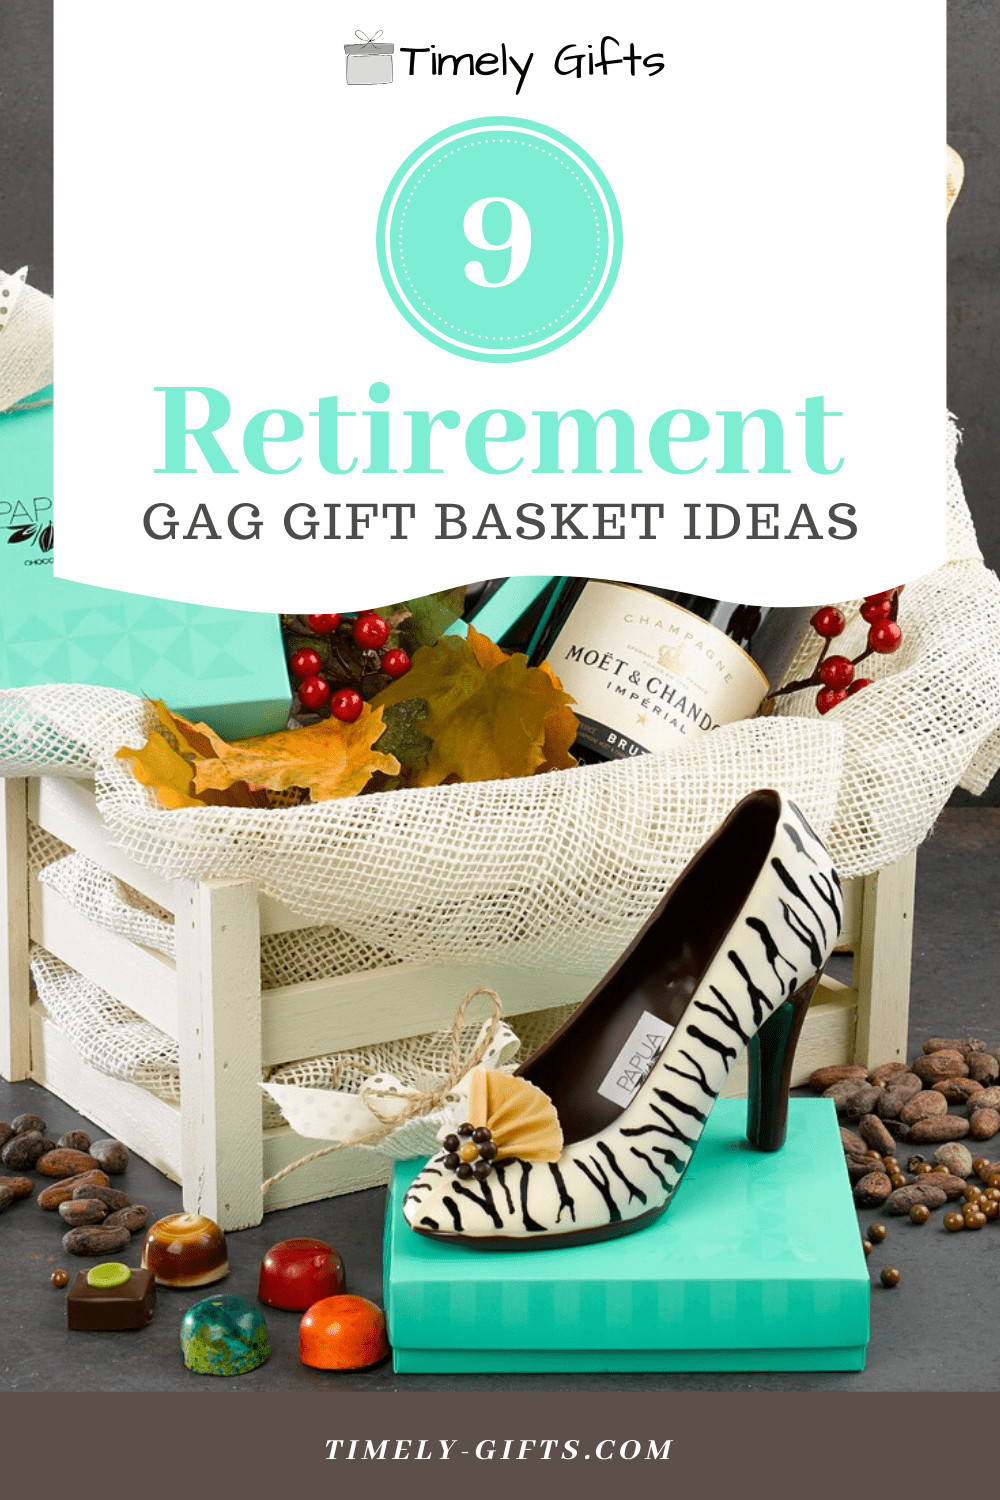 Retirement Gift Ideas For Couples
 9 Funny Retirement Gag Gift Basket Ideas